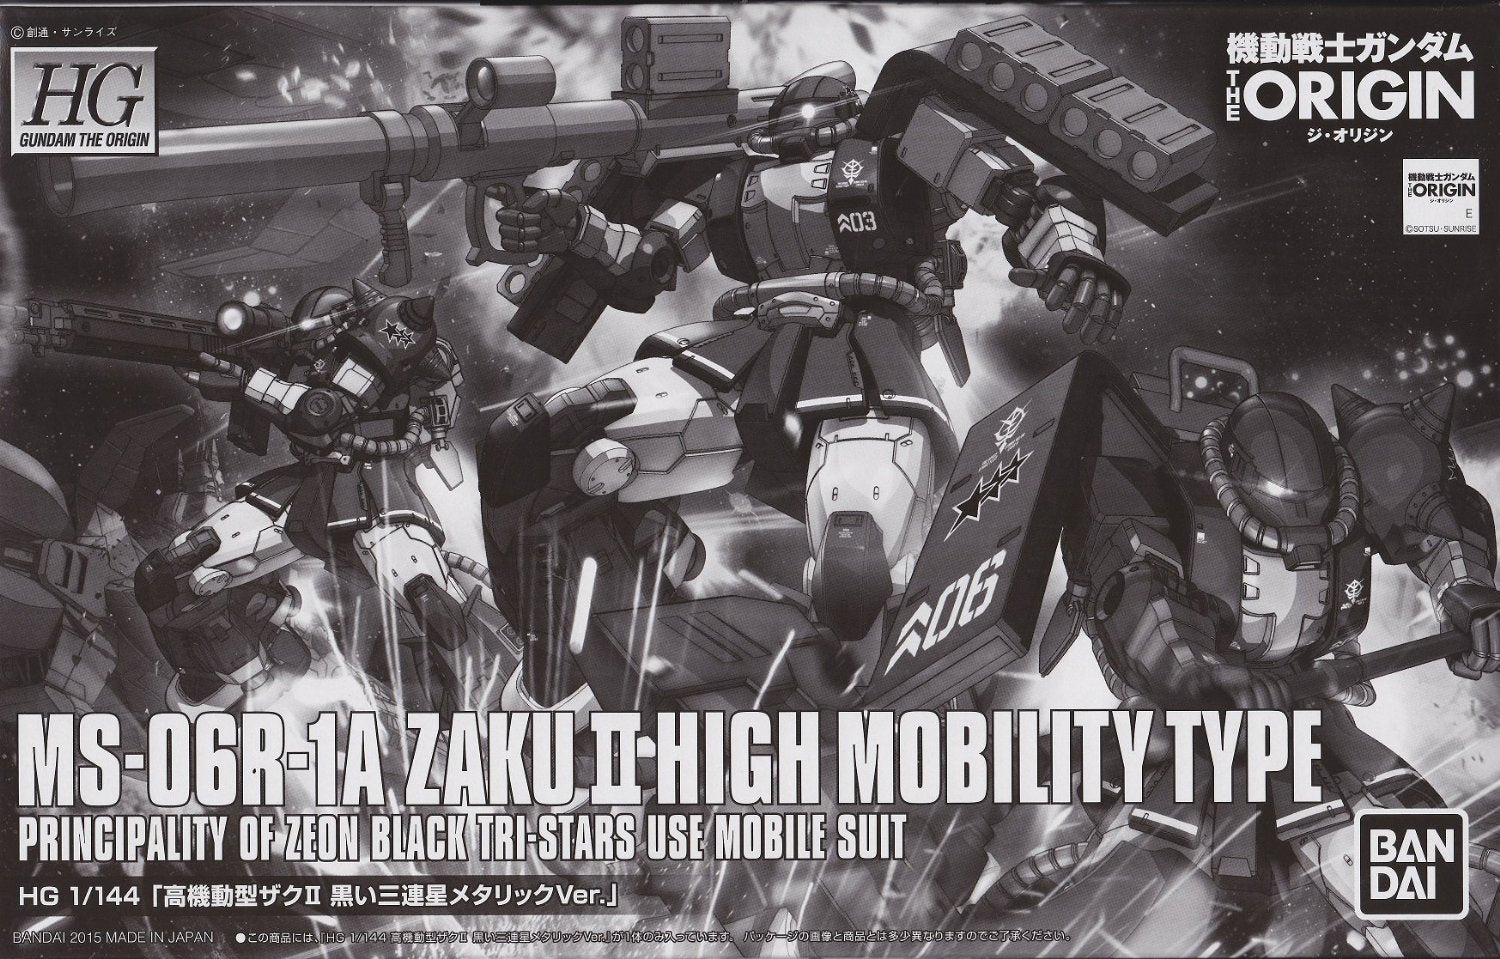 Event LIMITED HG Zaku II High Mobility Type Principality of Zeon